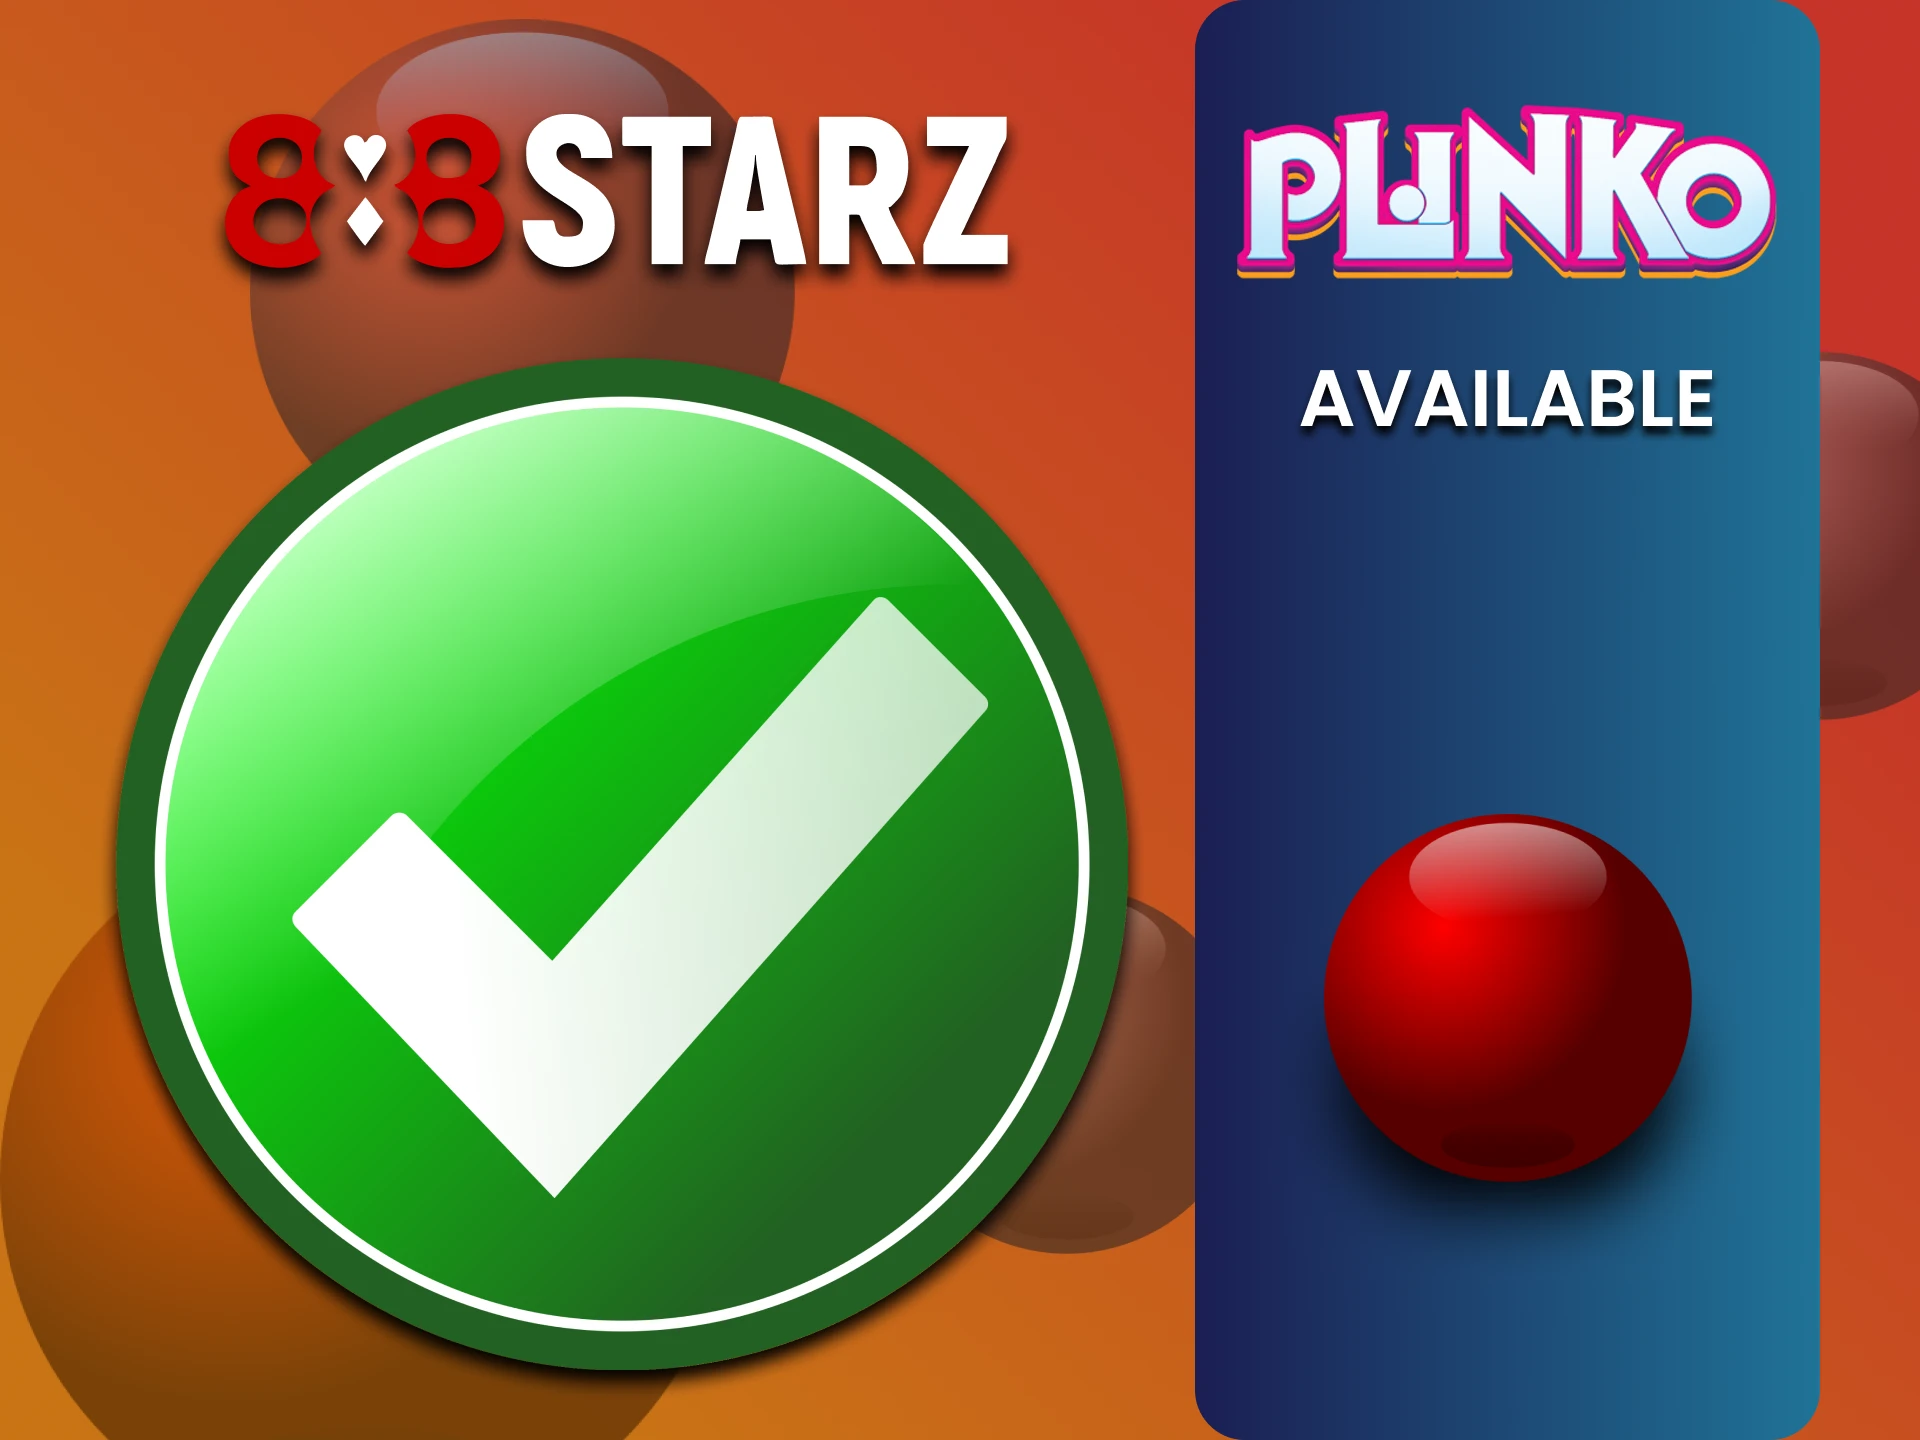 Choose your version of Plinko on the 888starz website.